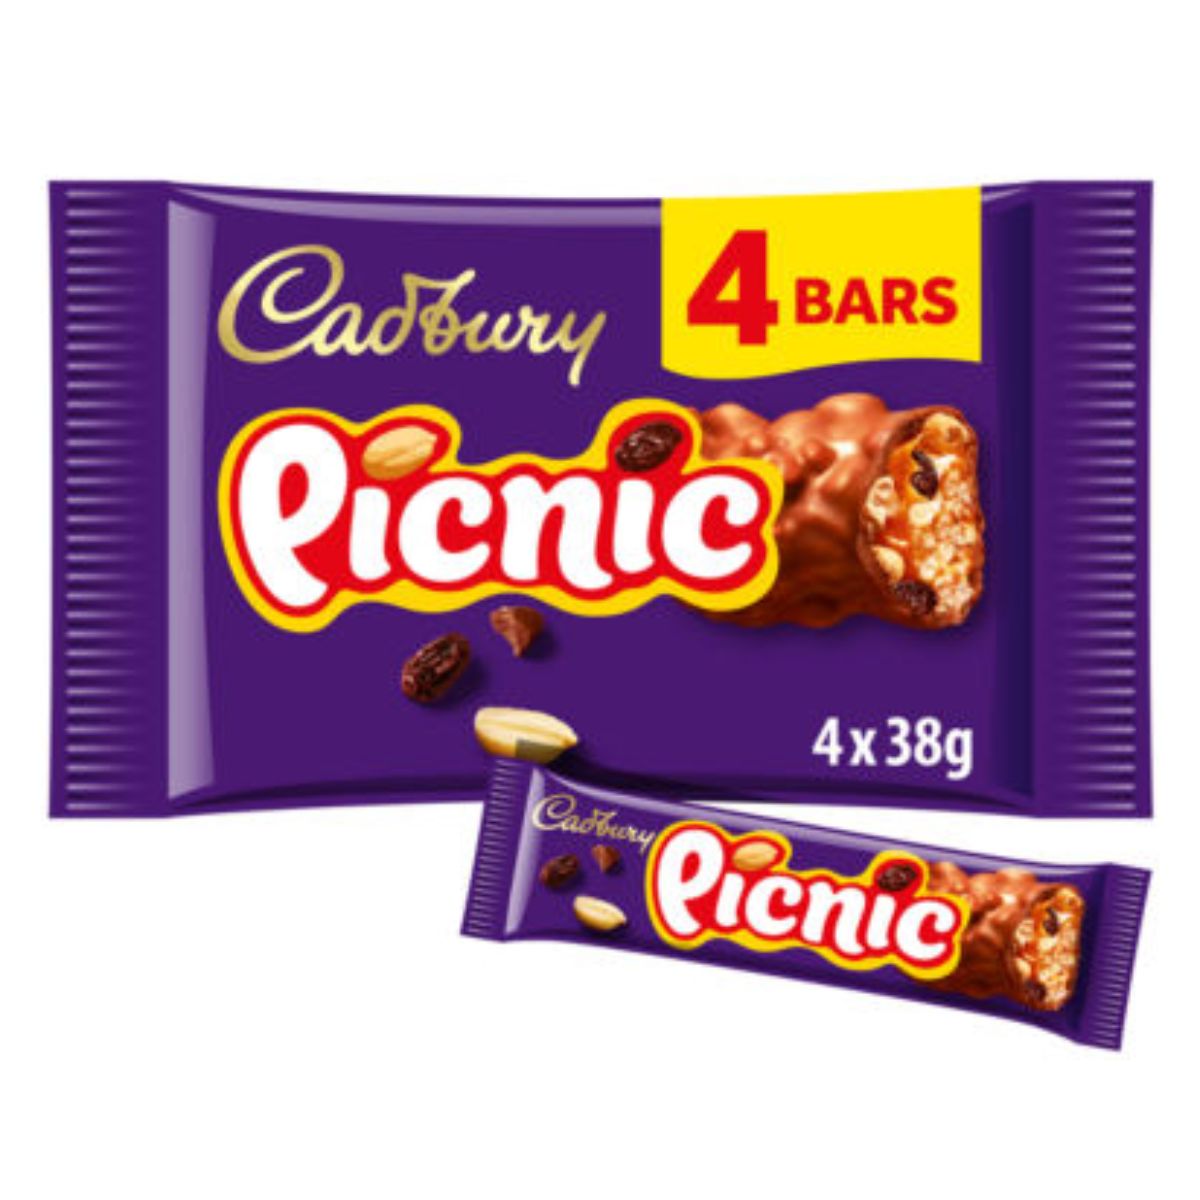 A package of Cadbury - Picnic Chocolate Bar - 4 x 38g with 4 individual bars displayed.